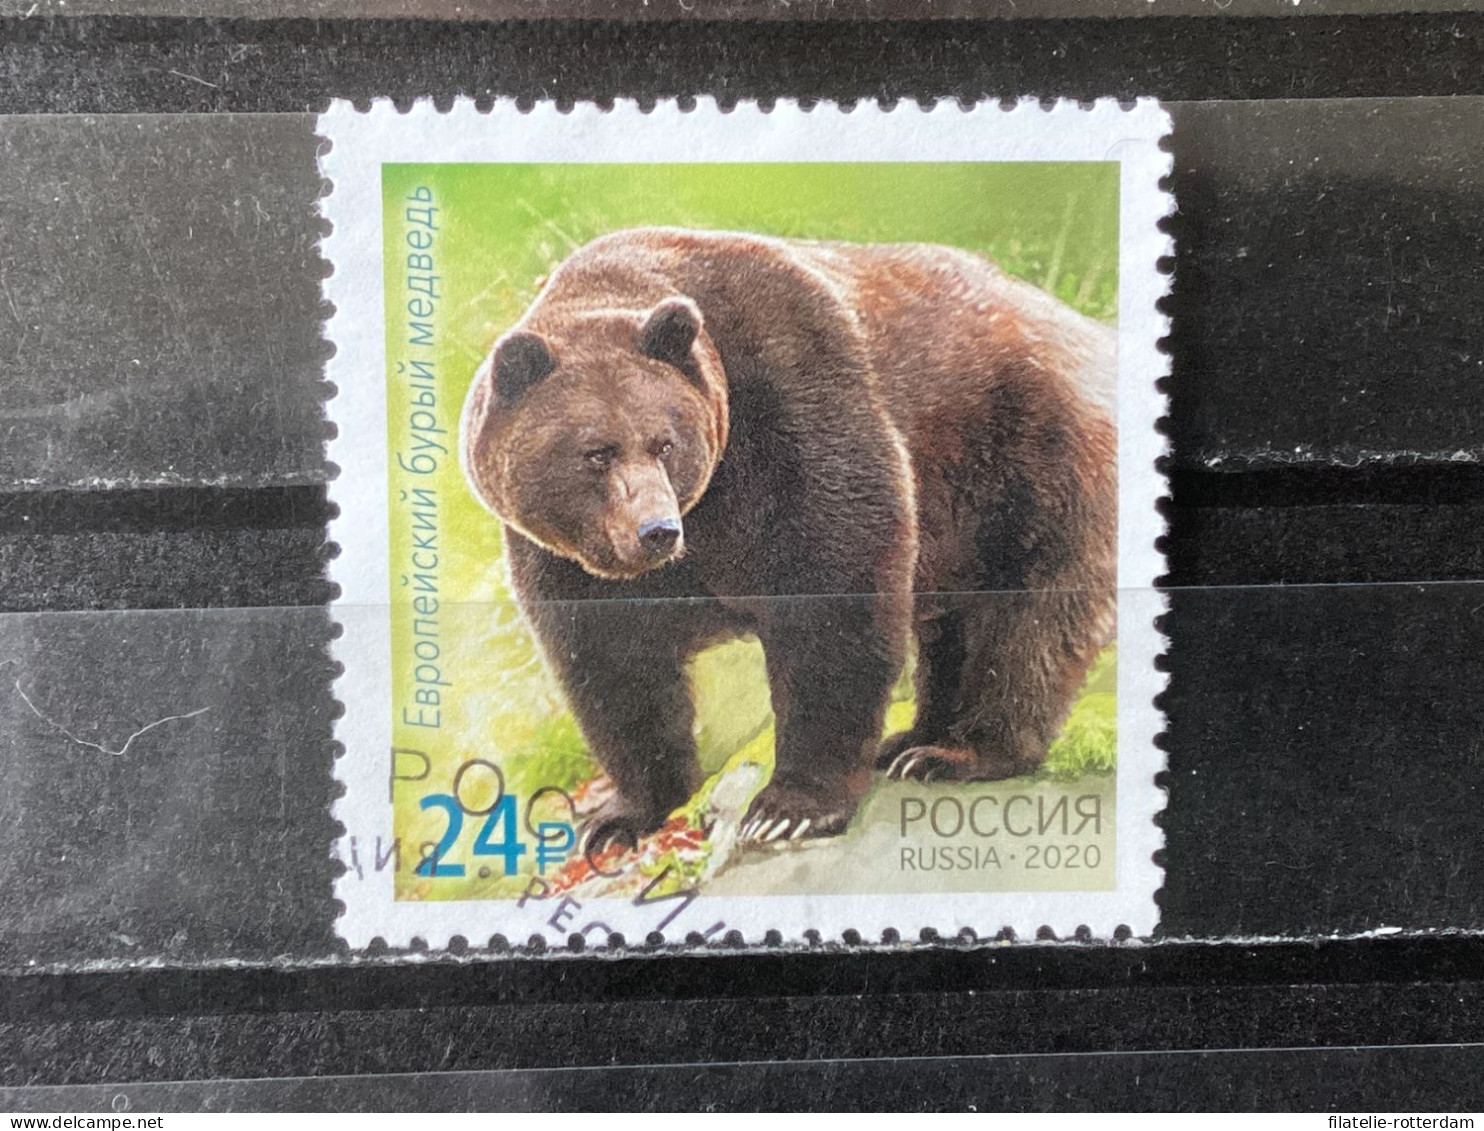 Russia / Rusland - Bears (24) 2020 - Oblitérés